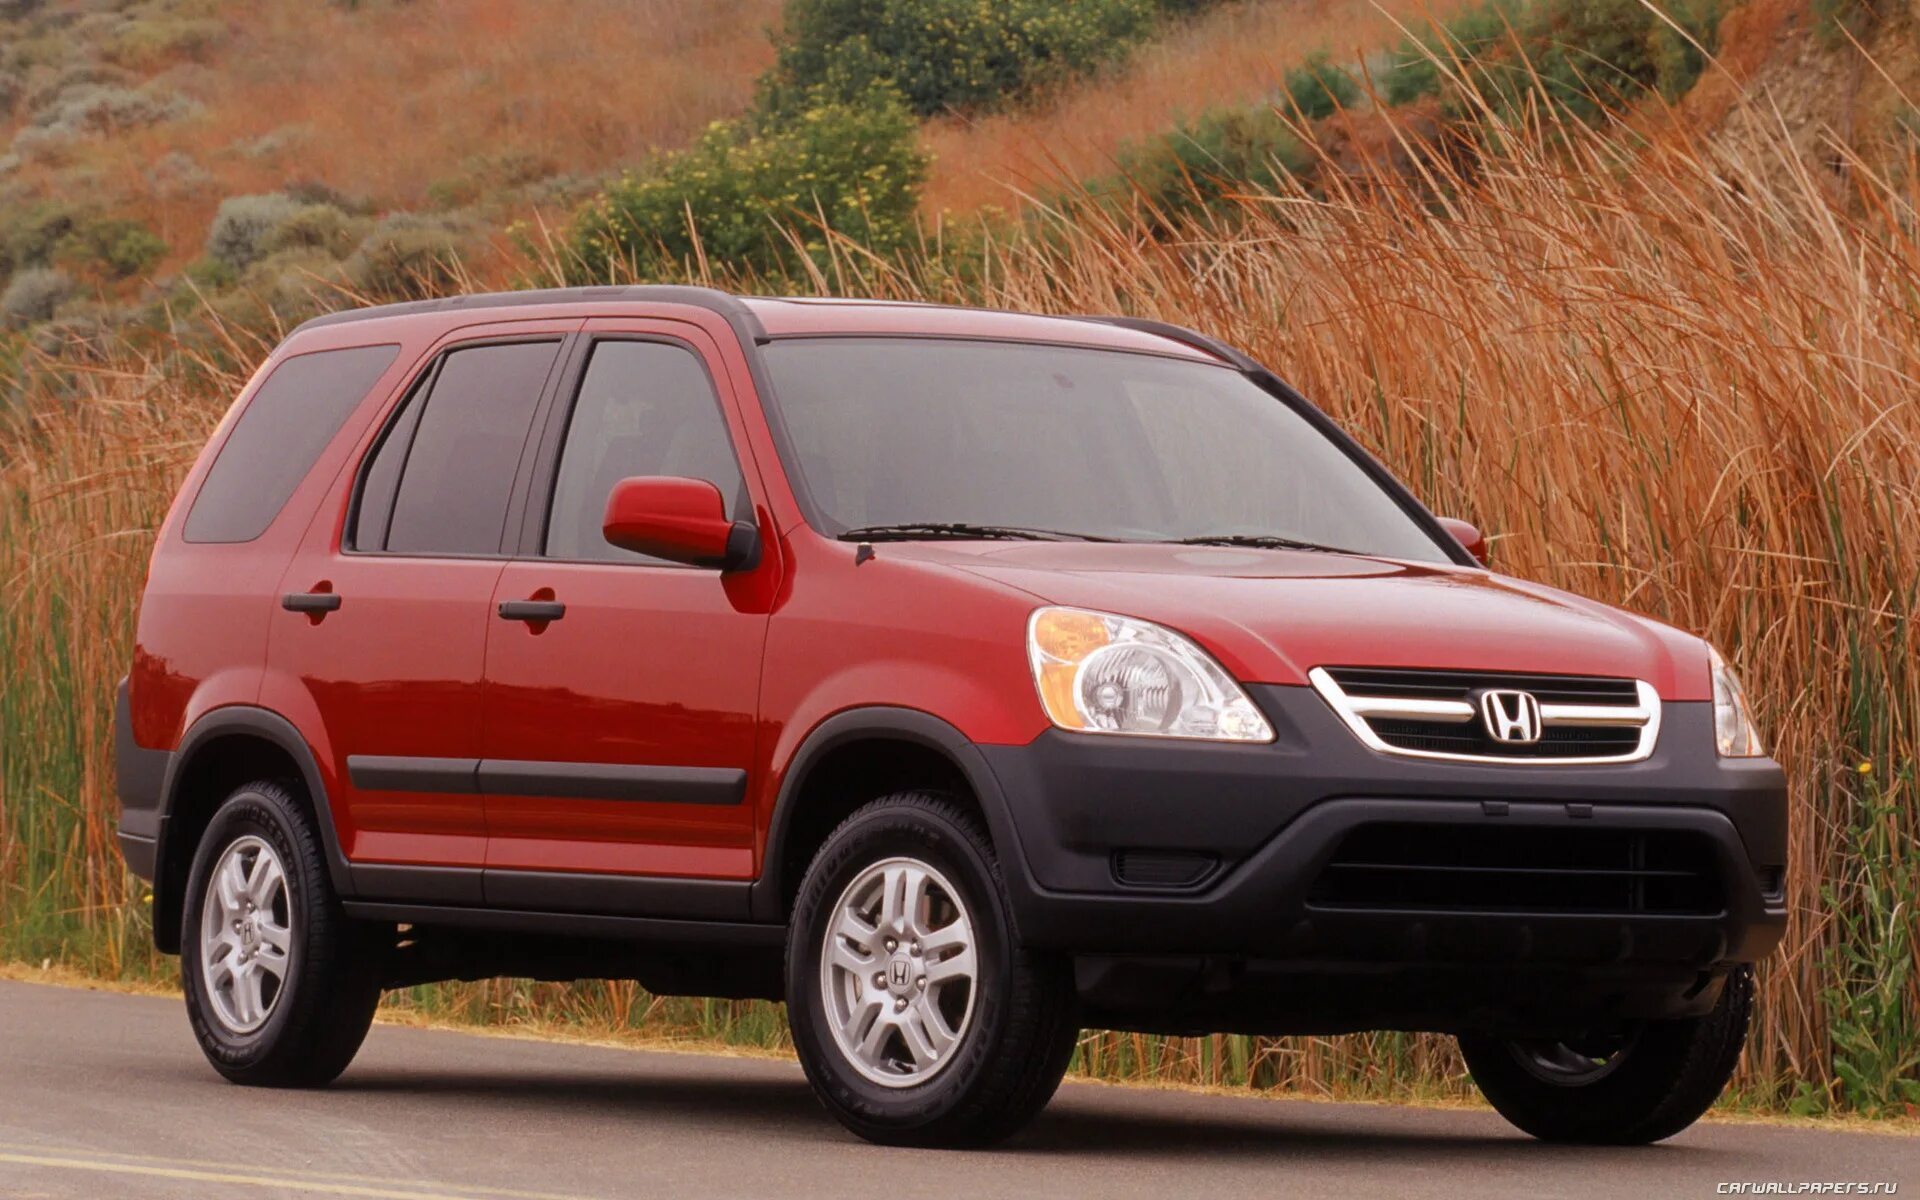 Хонда црв 2001 год. Honda CR-V 2004. Honda CR-V 2002. Honda CR-V 2003. Honda CRV 2002.